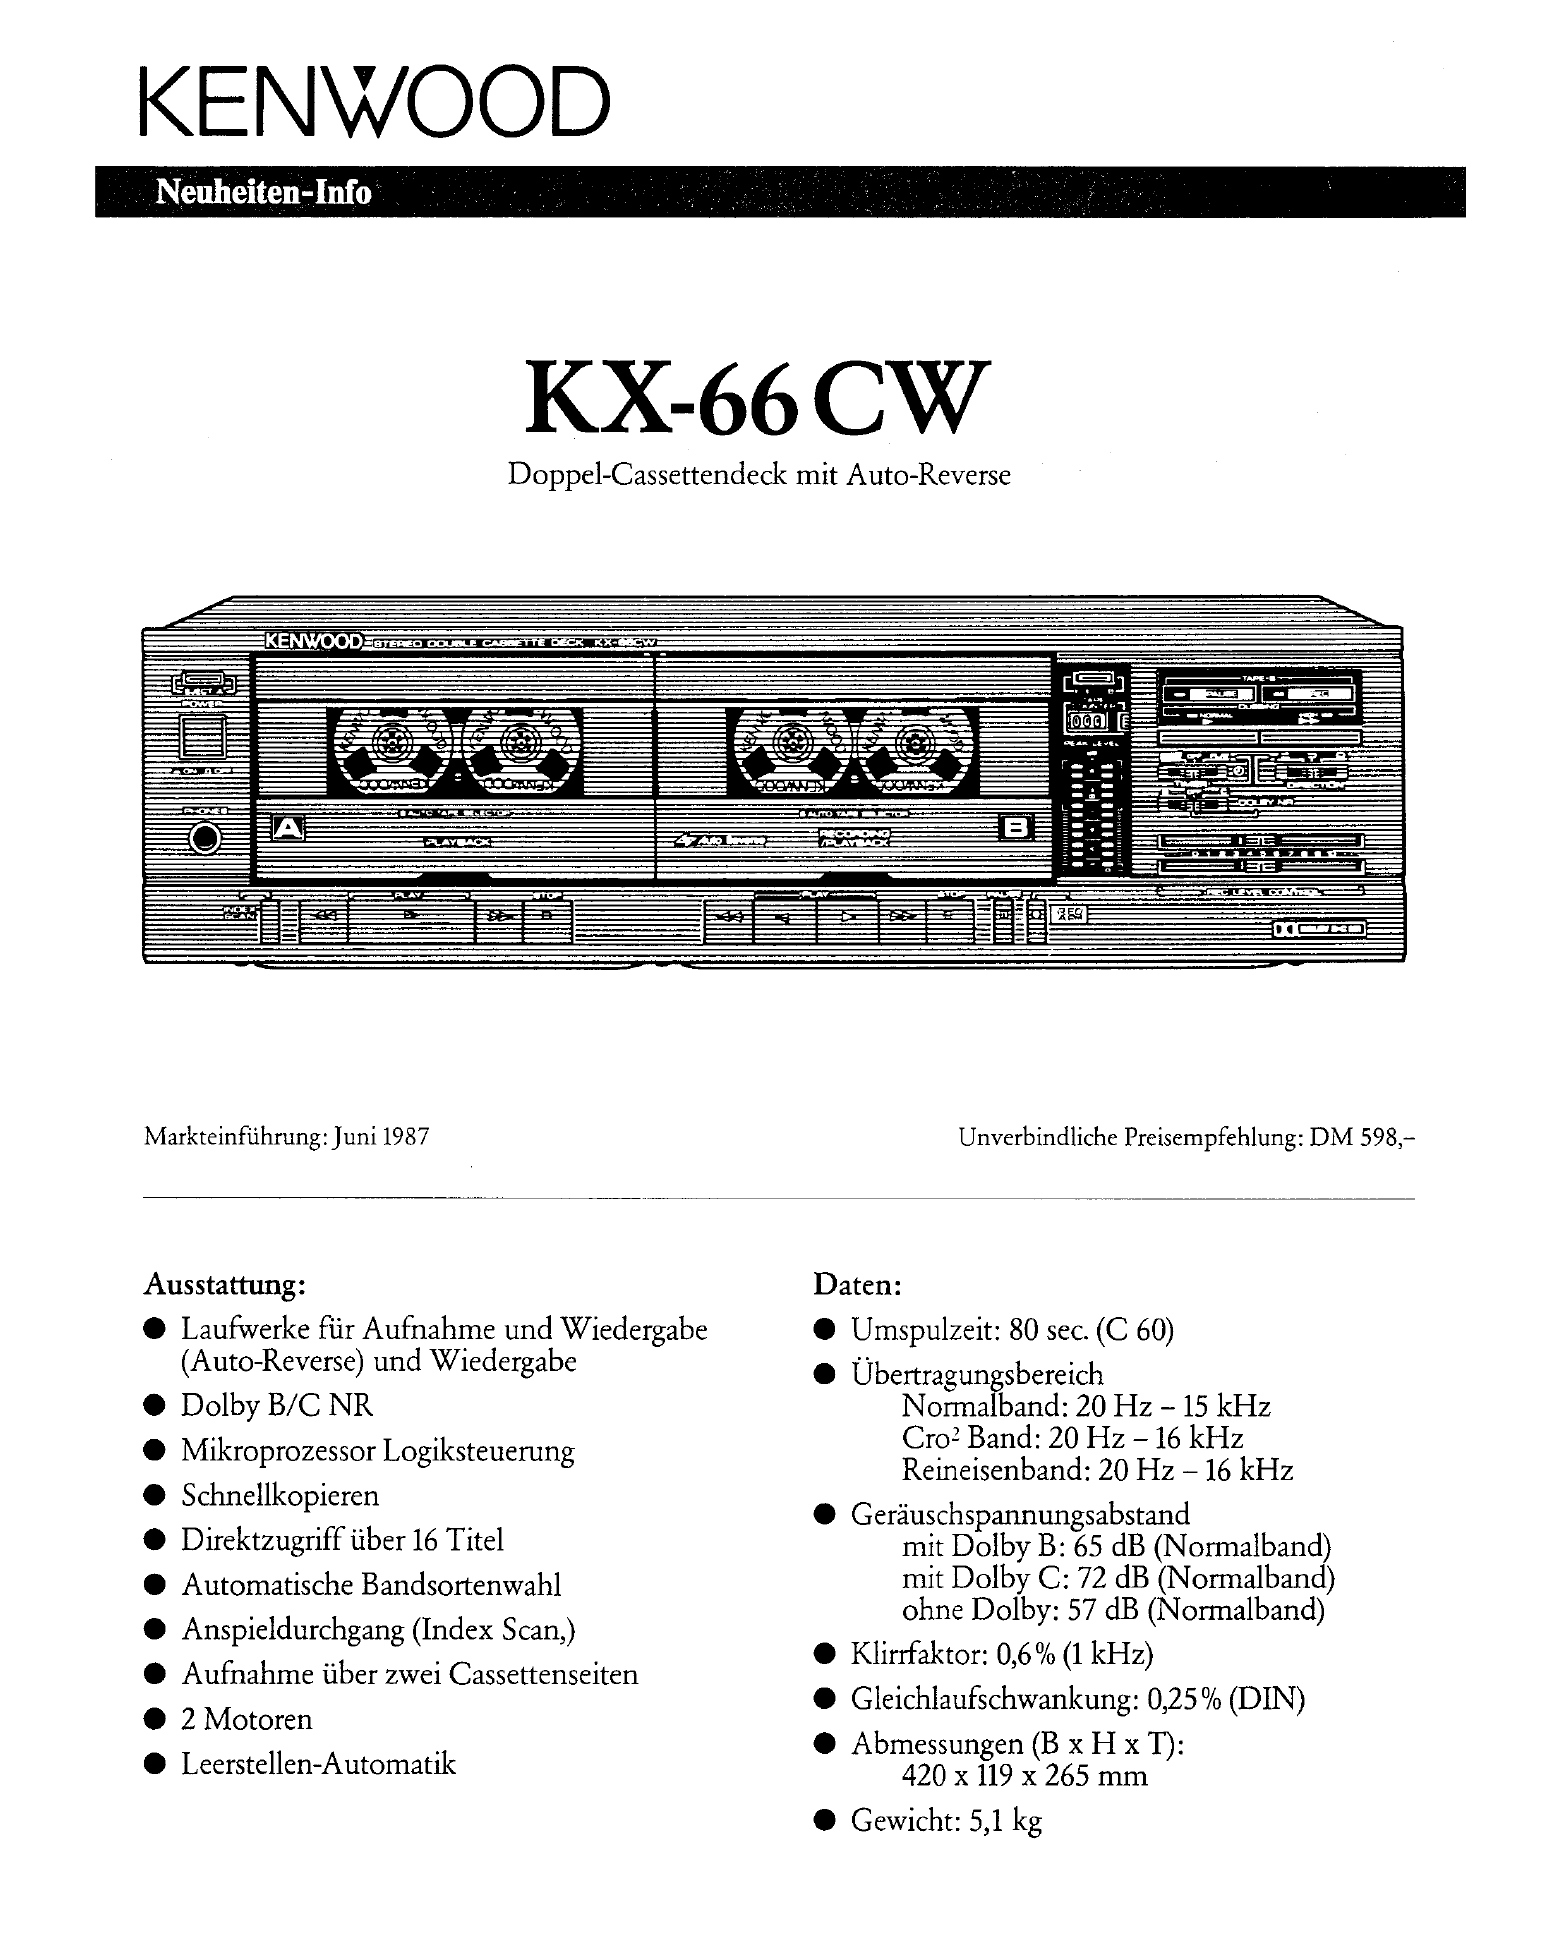 Kenwood KX-66 CW-Prospekt-1987.jpg